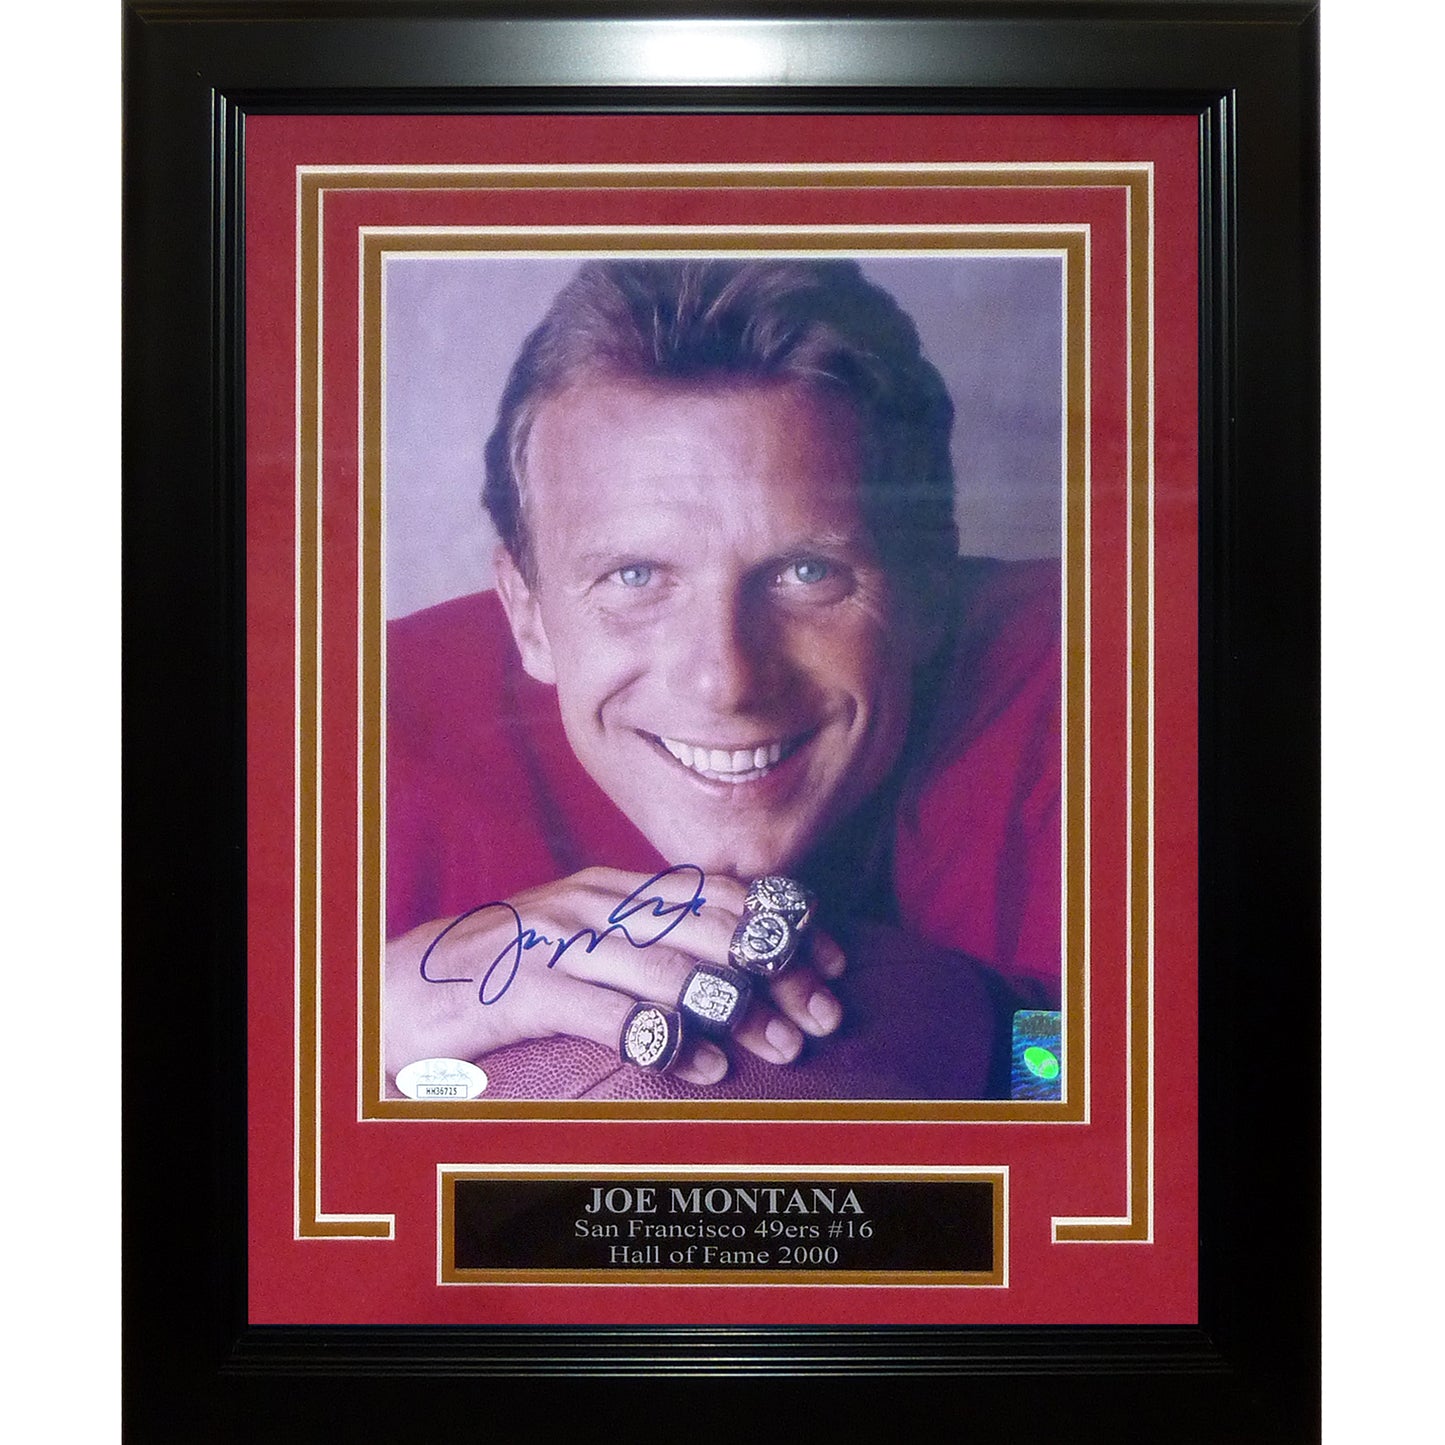 Joe Montana Autographed San Francisco 49ers (Rings) Deluxe Framed 8x10 Photo - Montana Holo